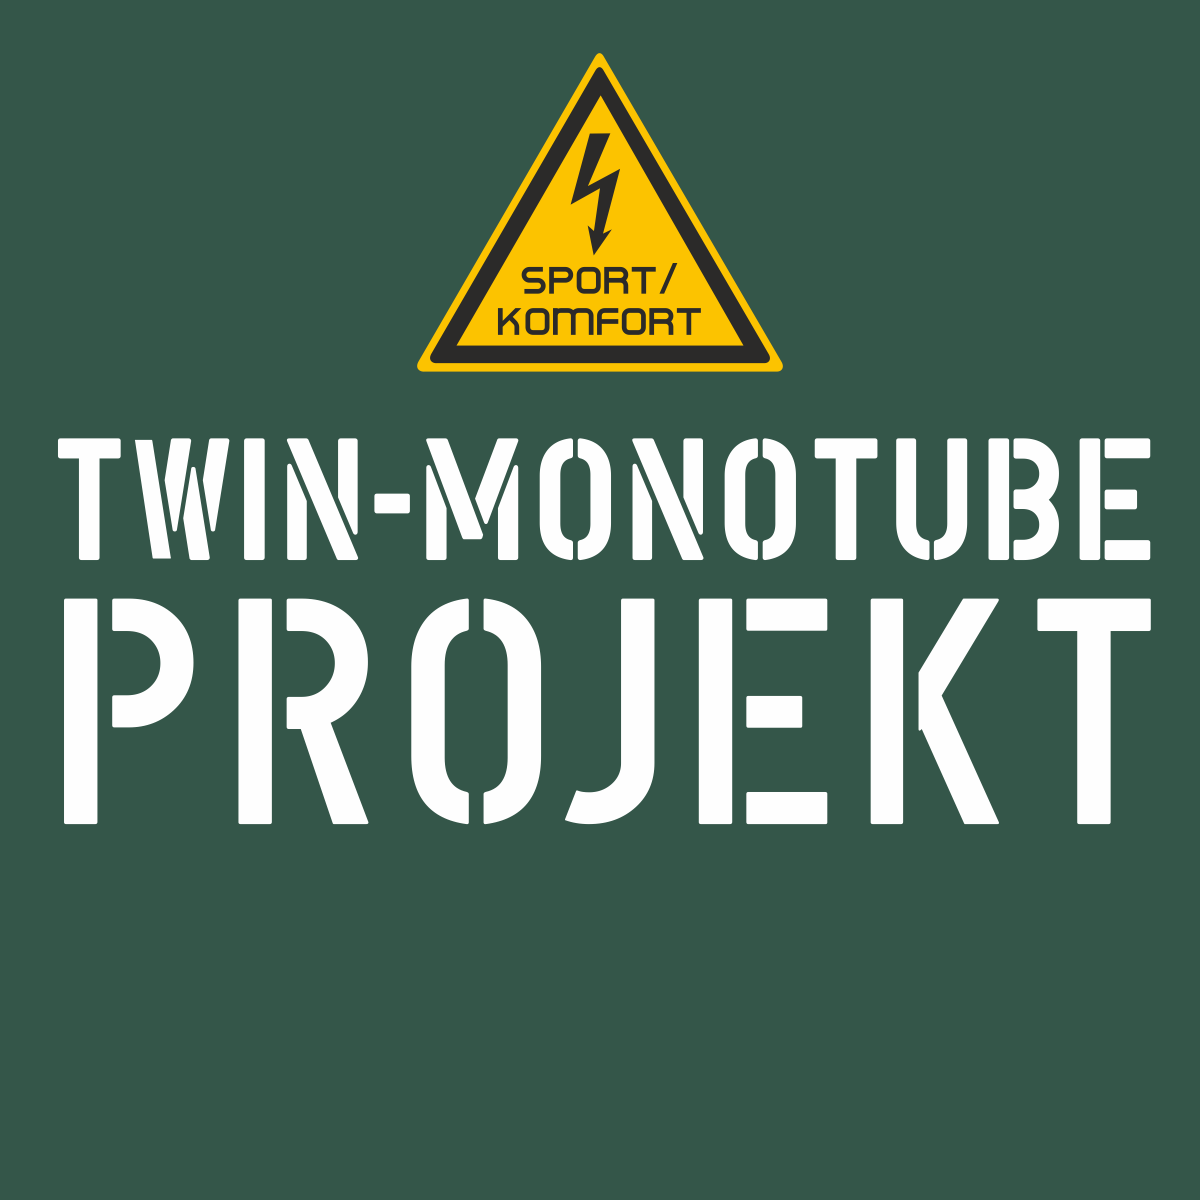 twin monotube projekt logo